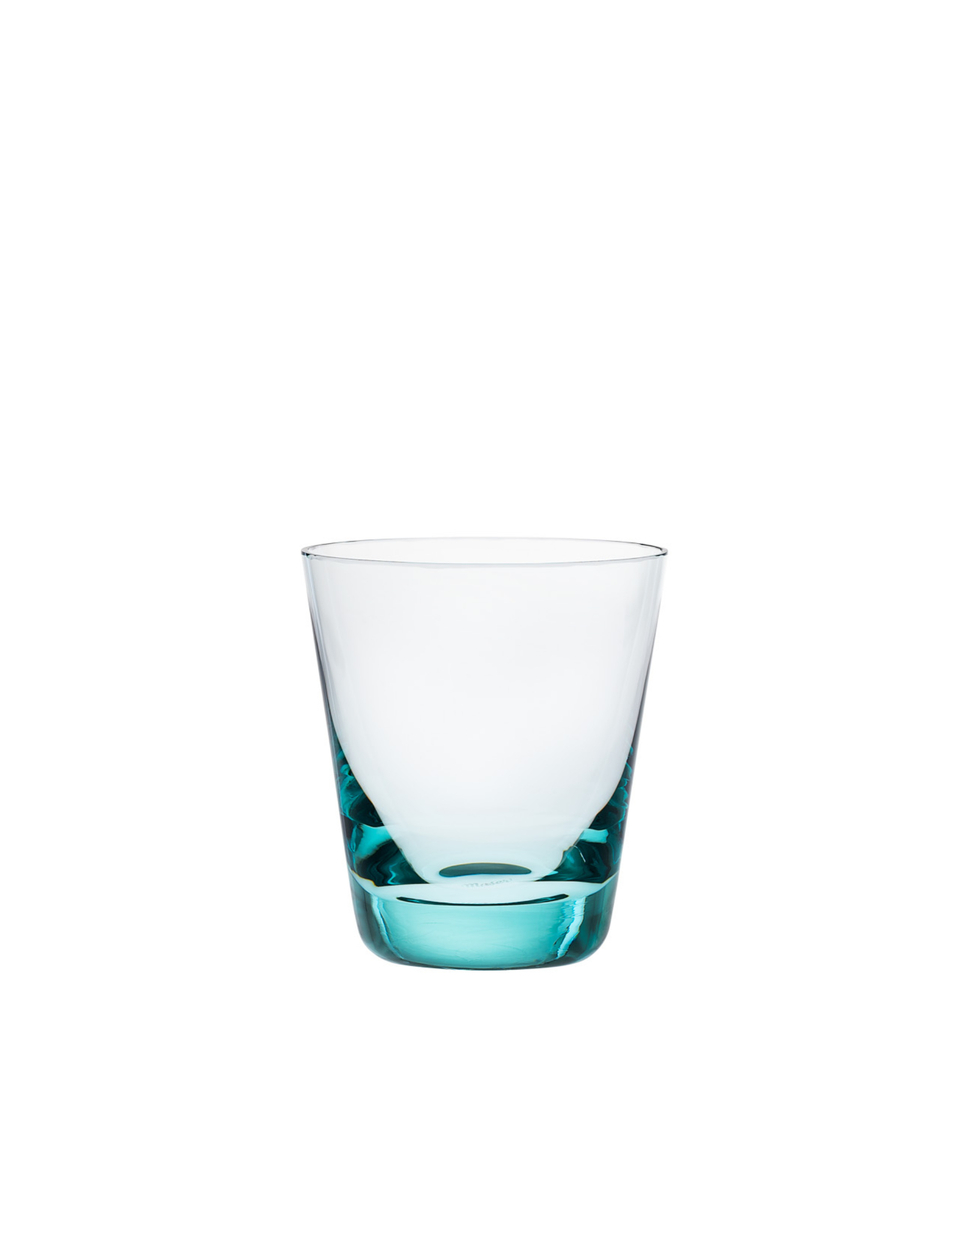 Conus glass, 250 ml